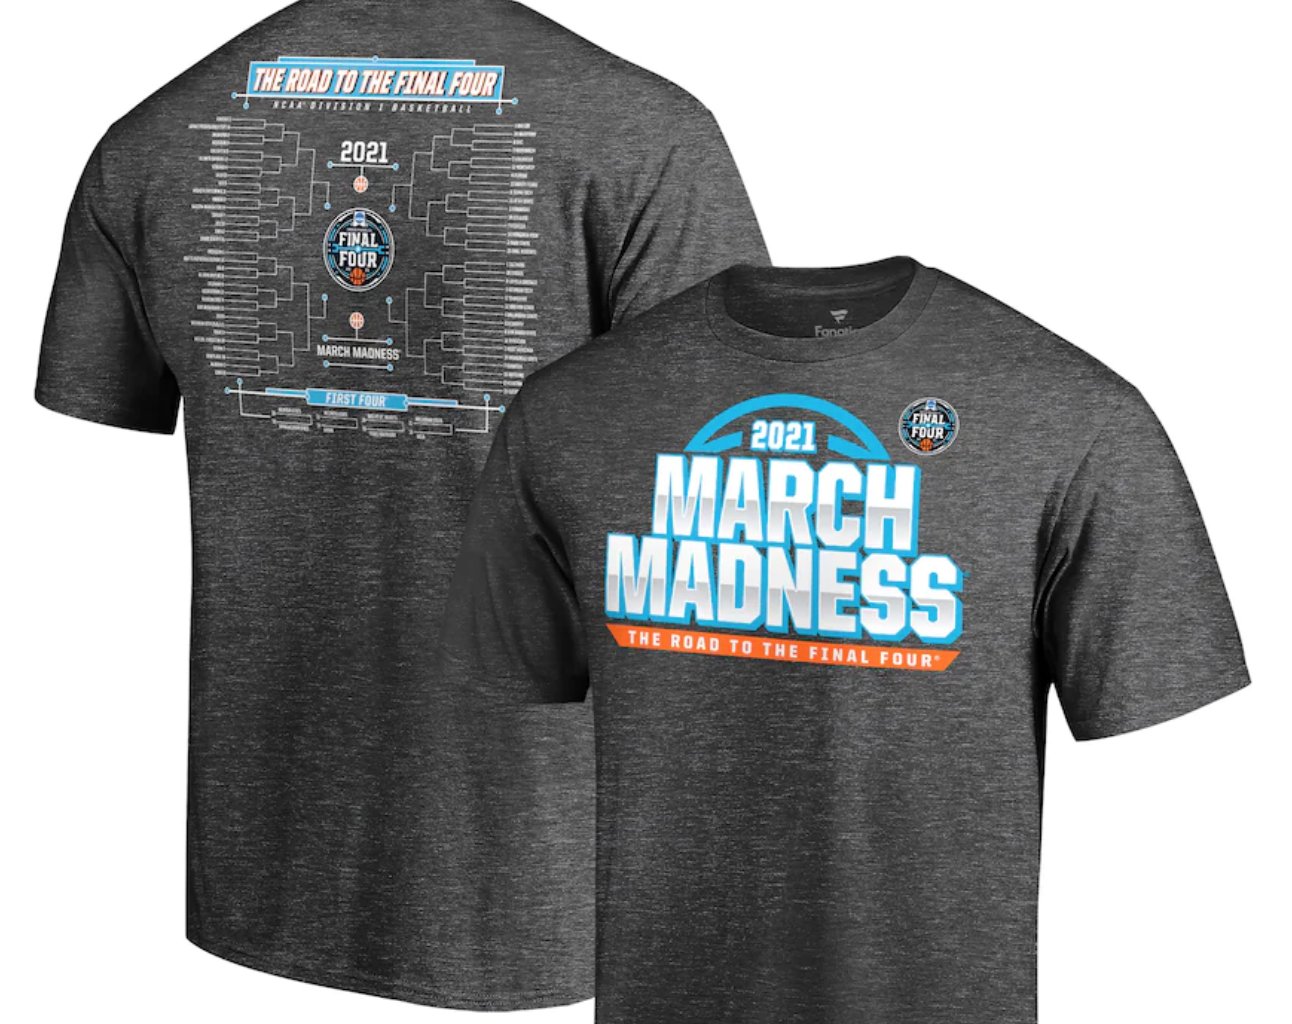 NCAA March Madness basketball gear 2021